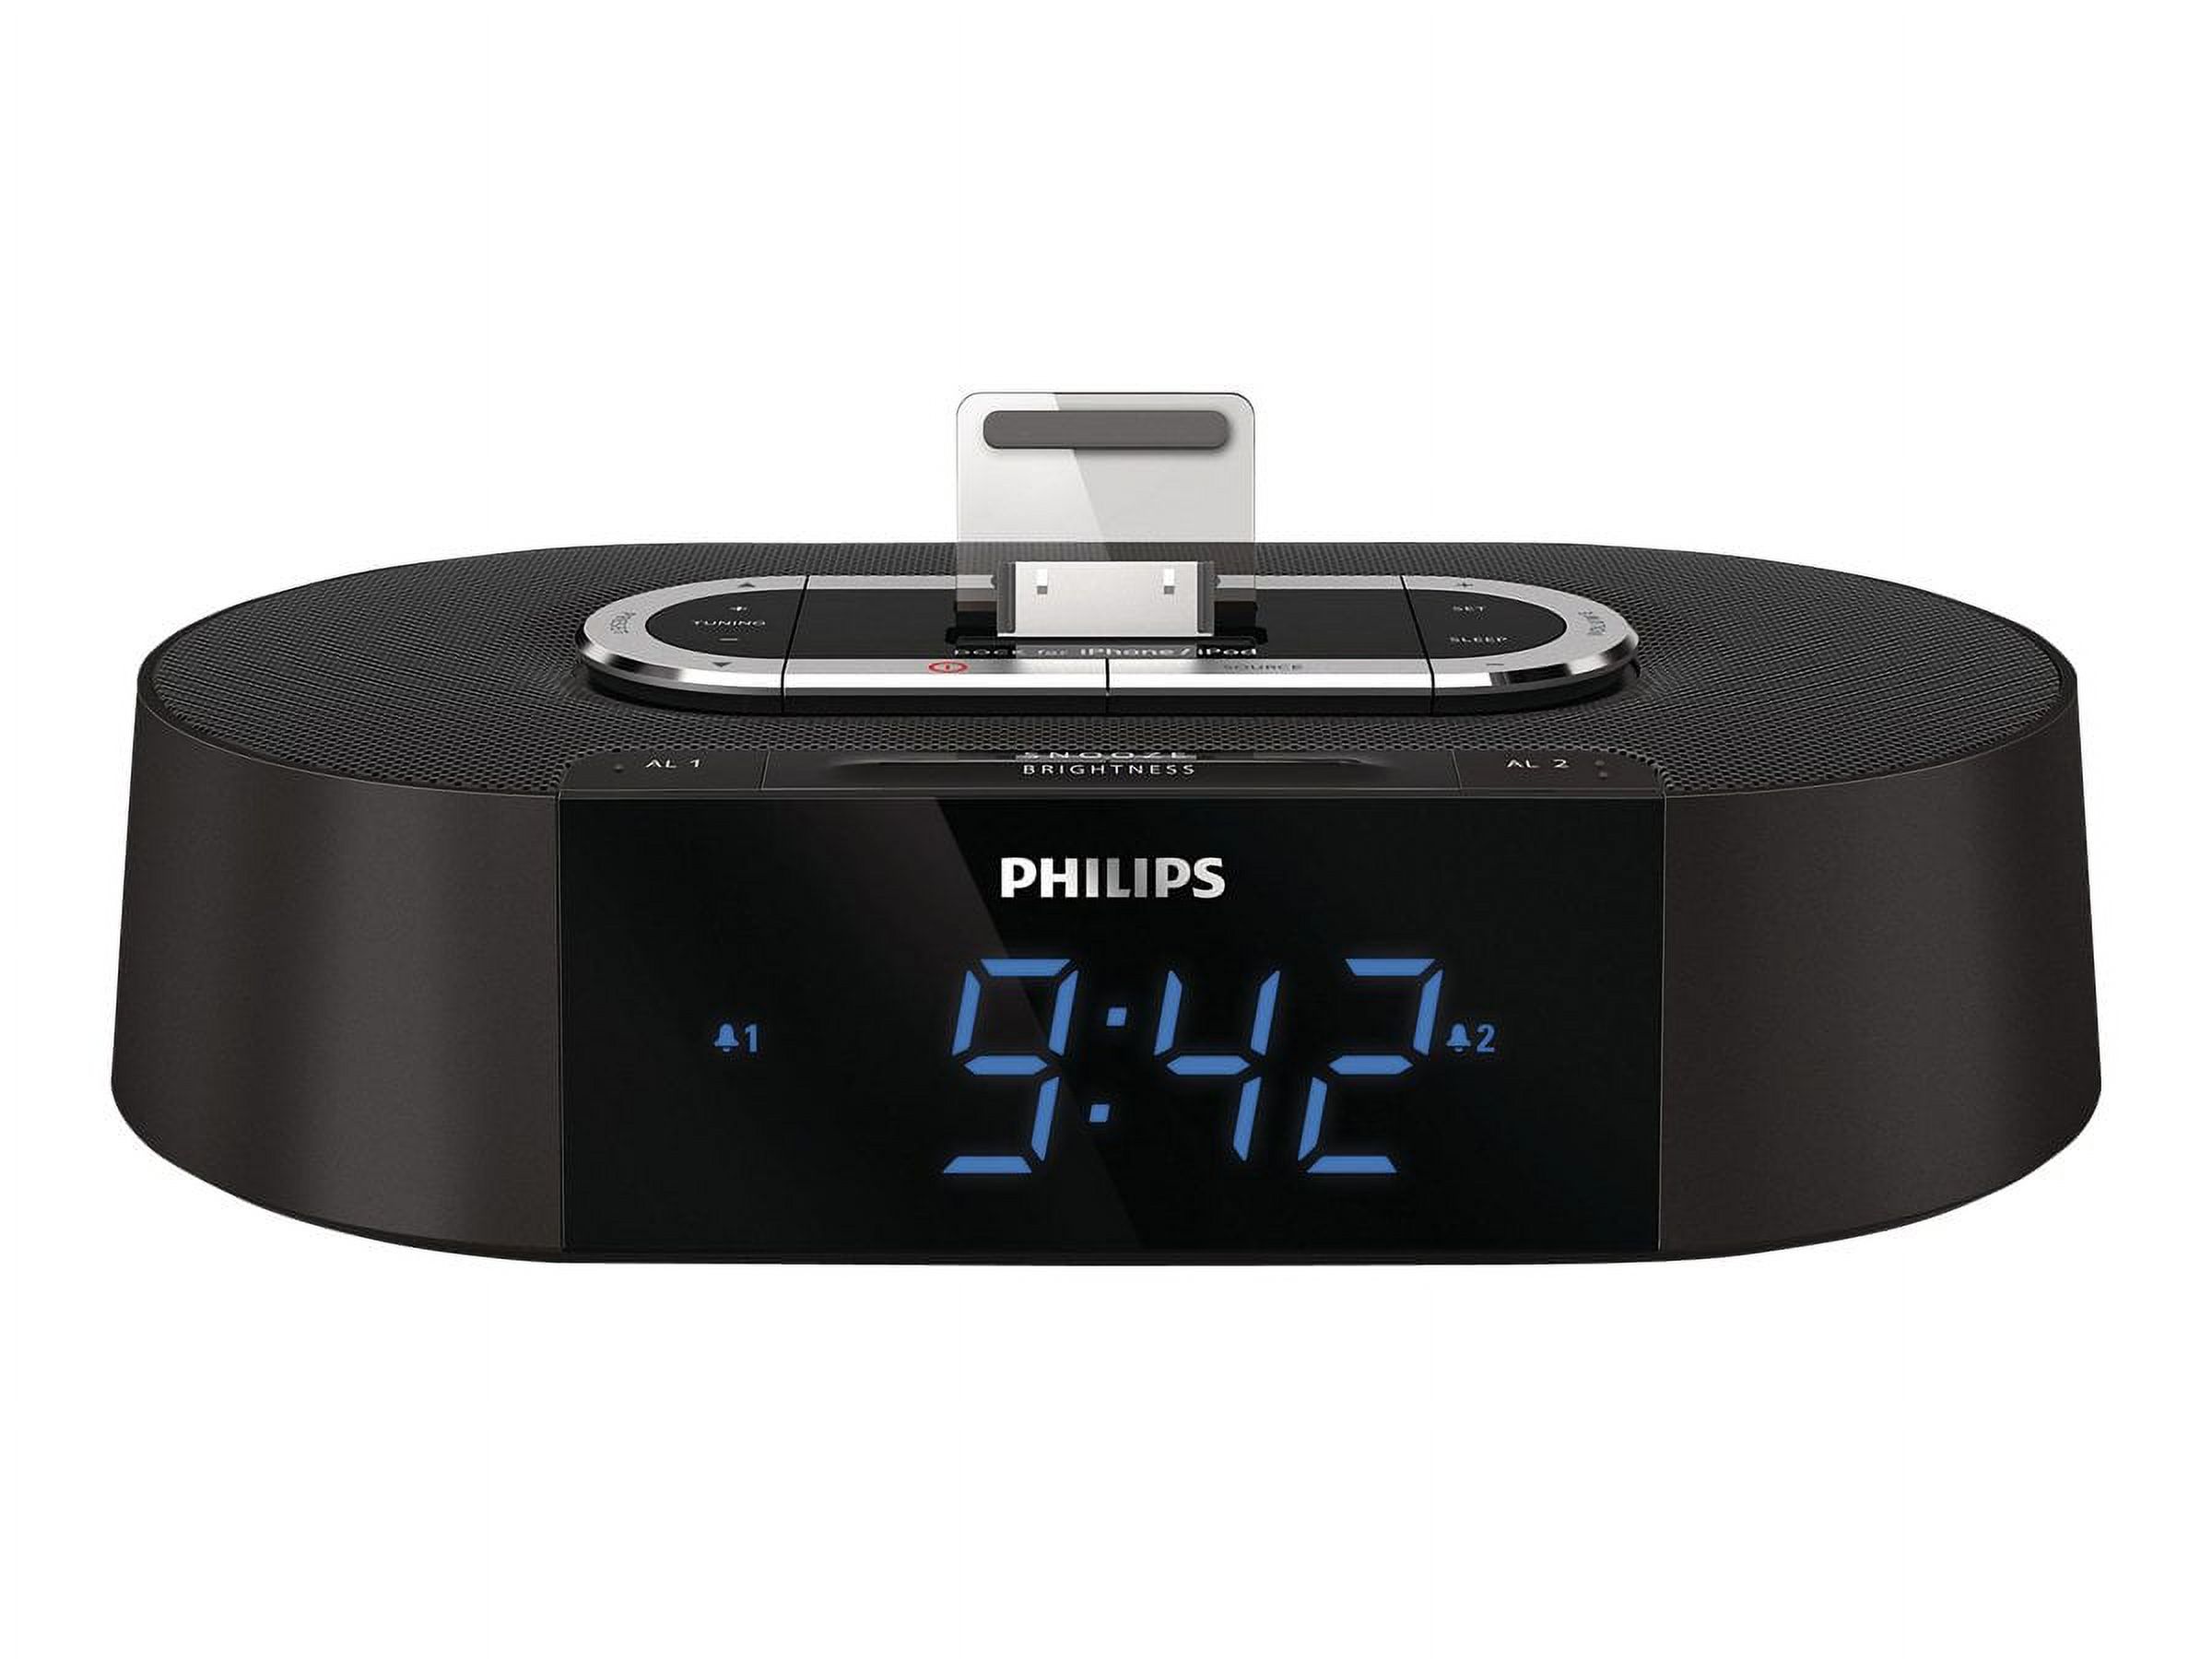 Philips AJ7030DG/37 Alarm Clock Radio 30-Pin Speaker Dock for Apple iPod/iPhone - image 4 of 6